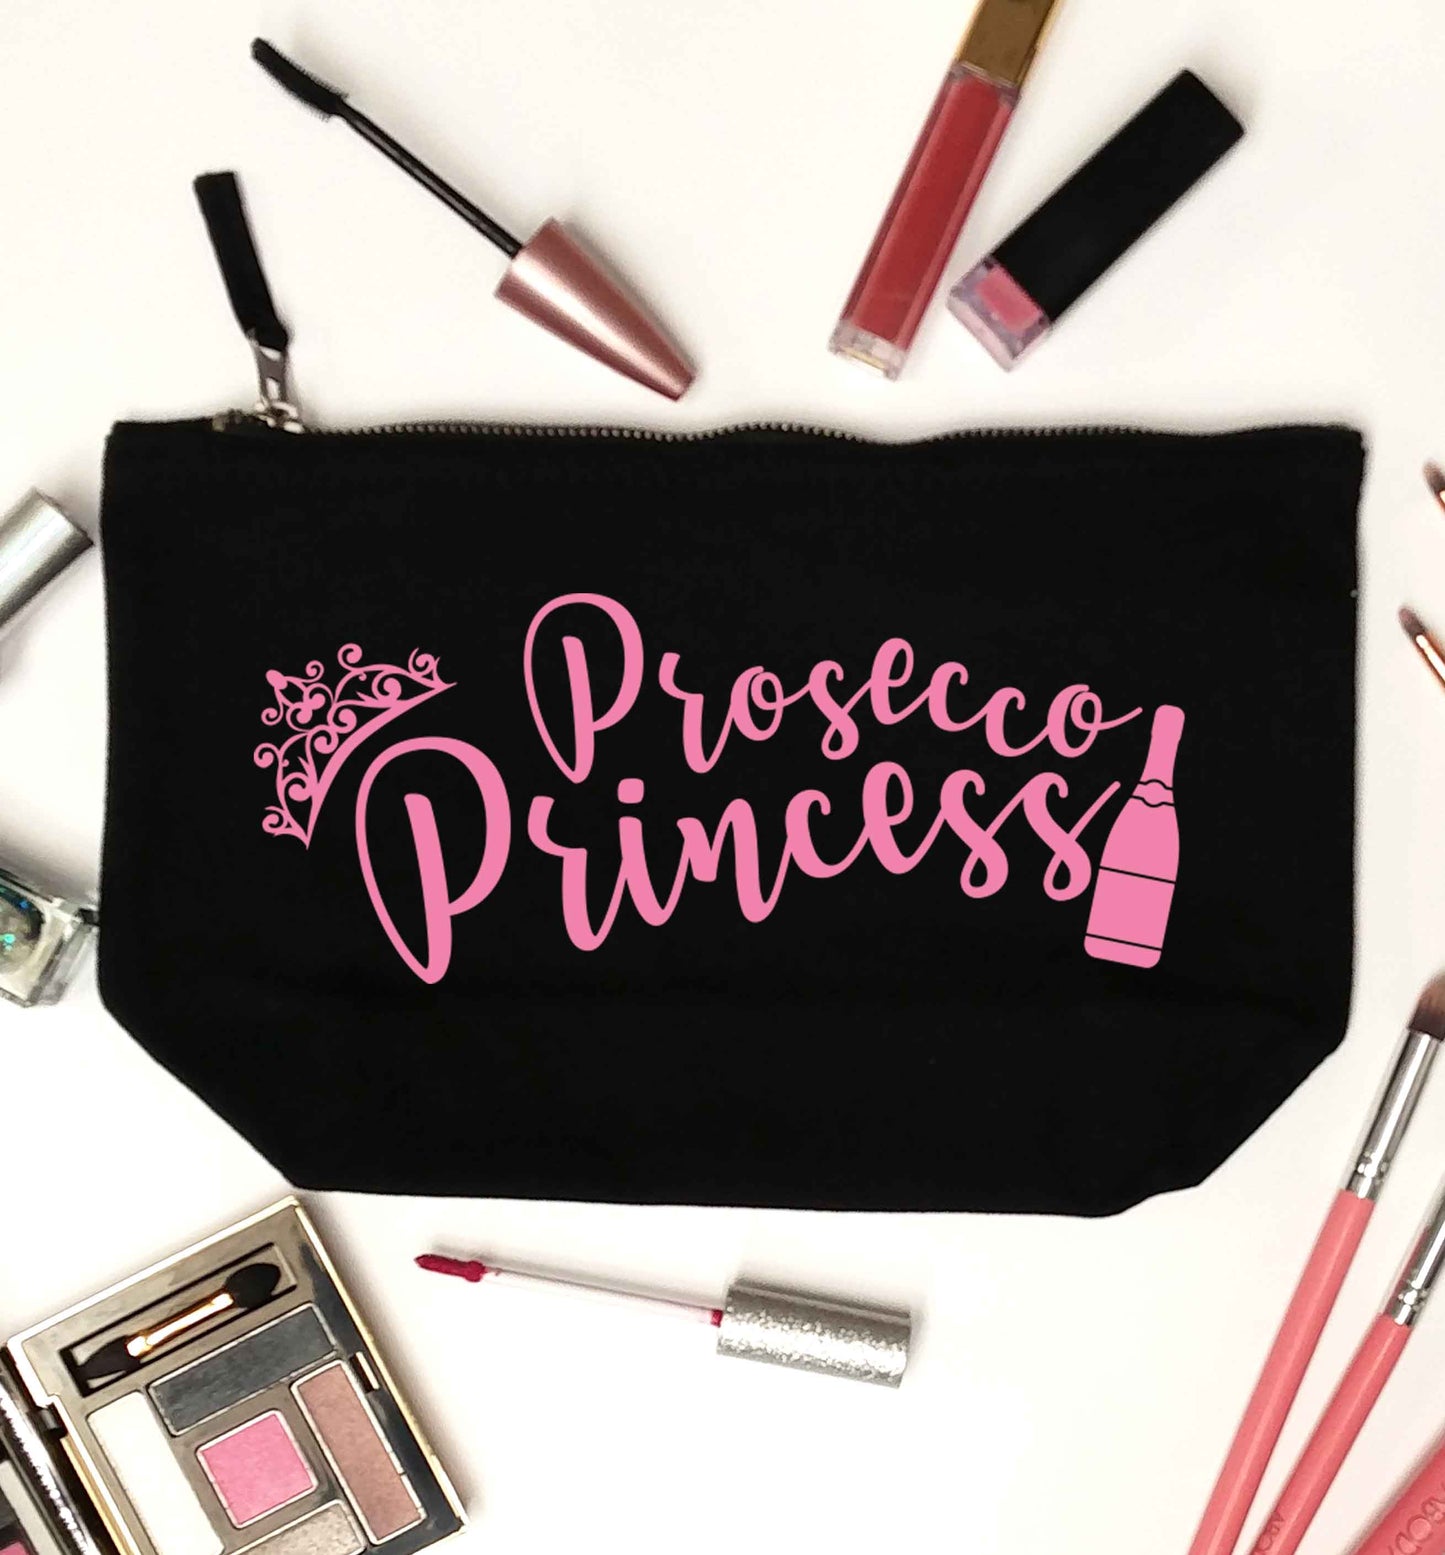 Prosecco princess black makeup bag